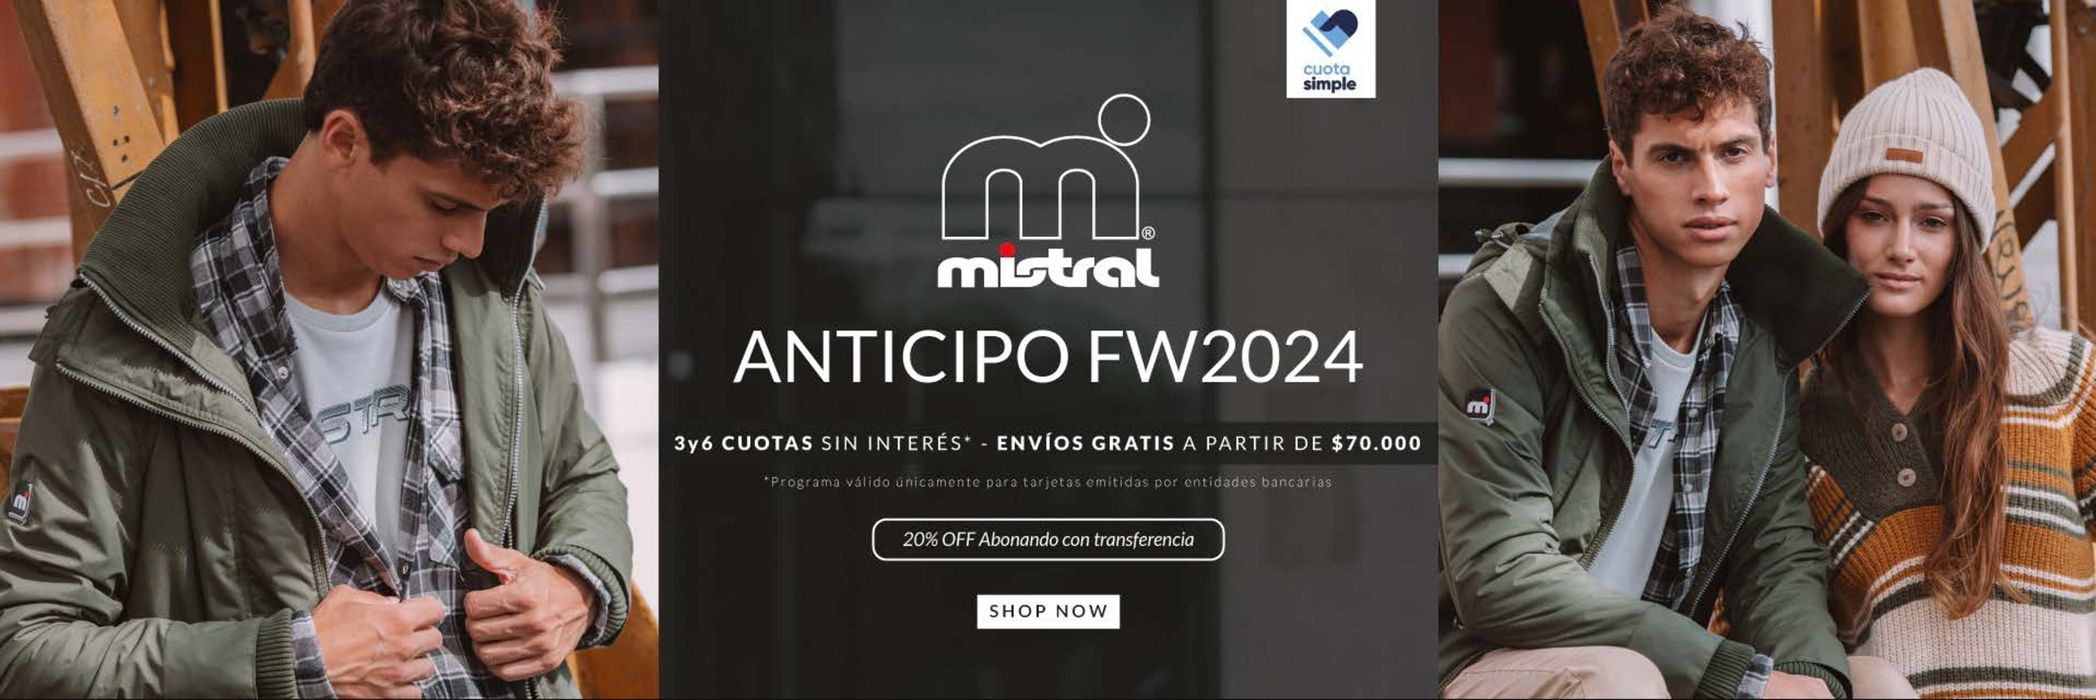 Catálogo Mistral en San Justo (Buenos Aires) | Anticipo FW2024 20% OFF con transferencia | 29/3/2024 - 29/4/2024